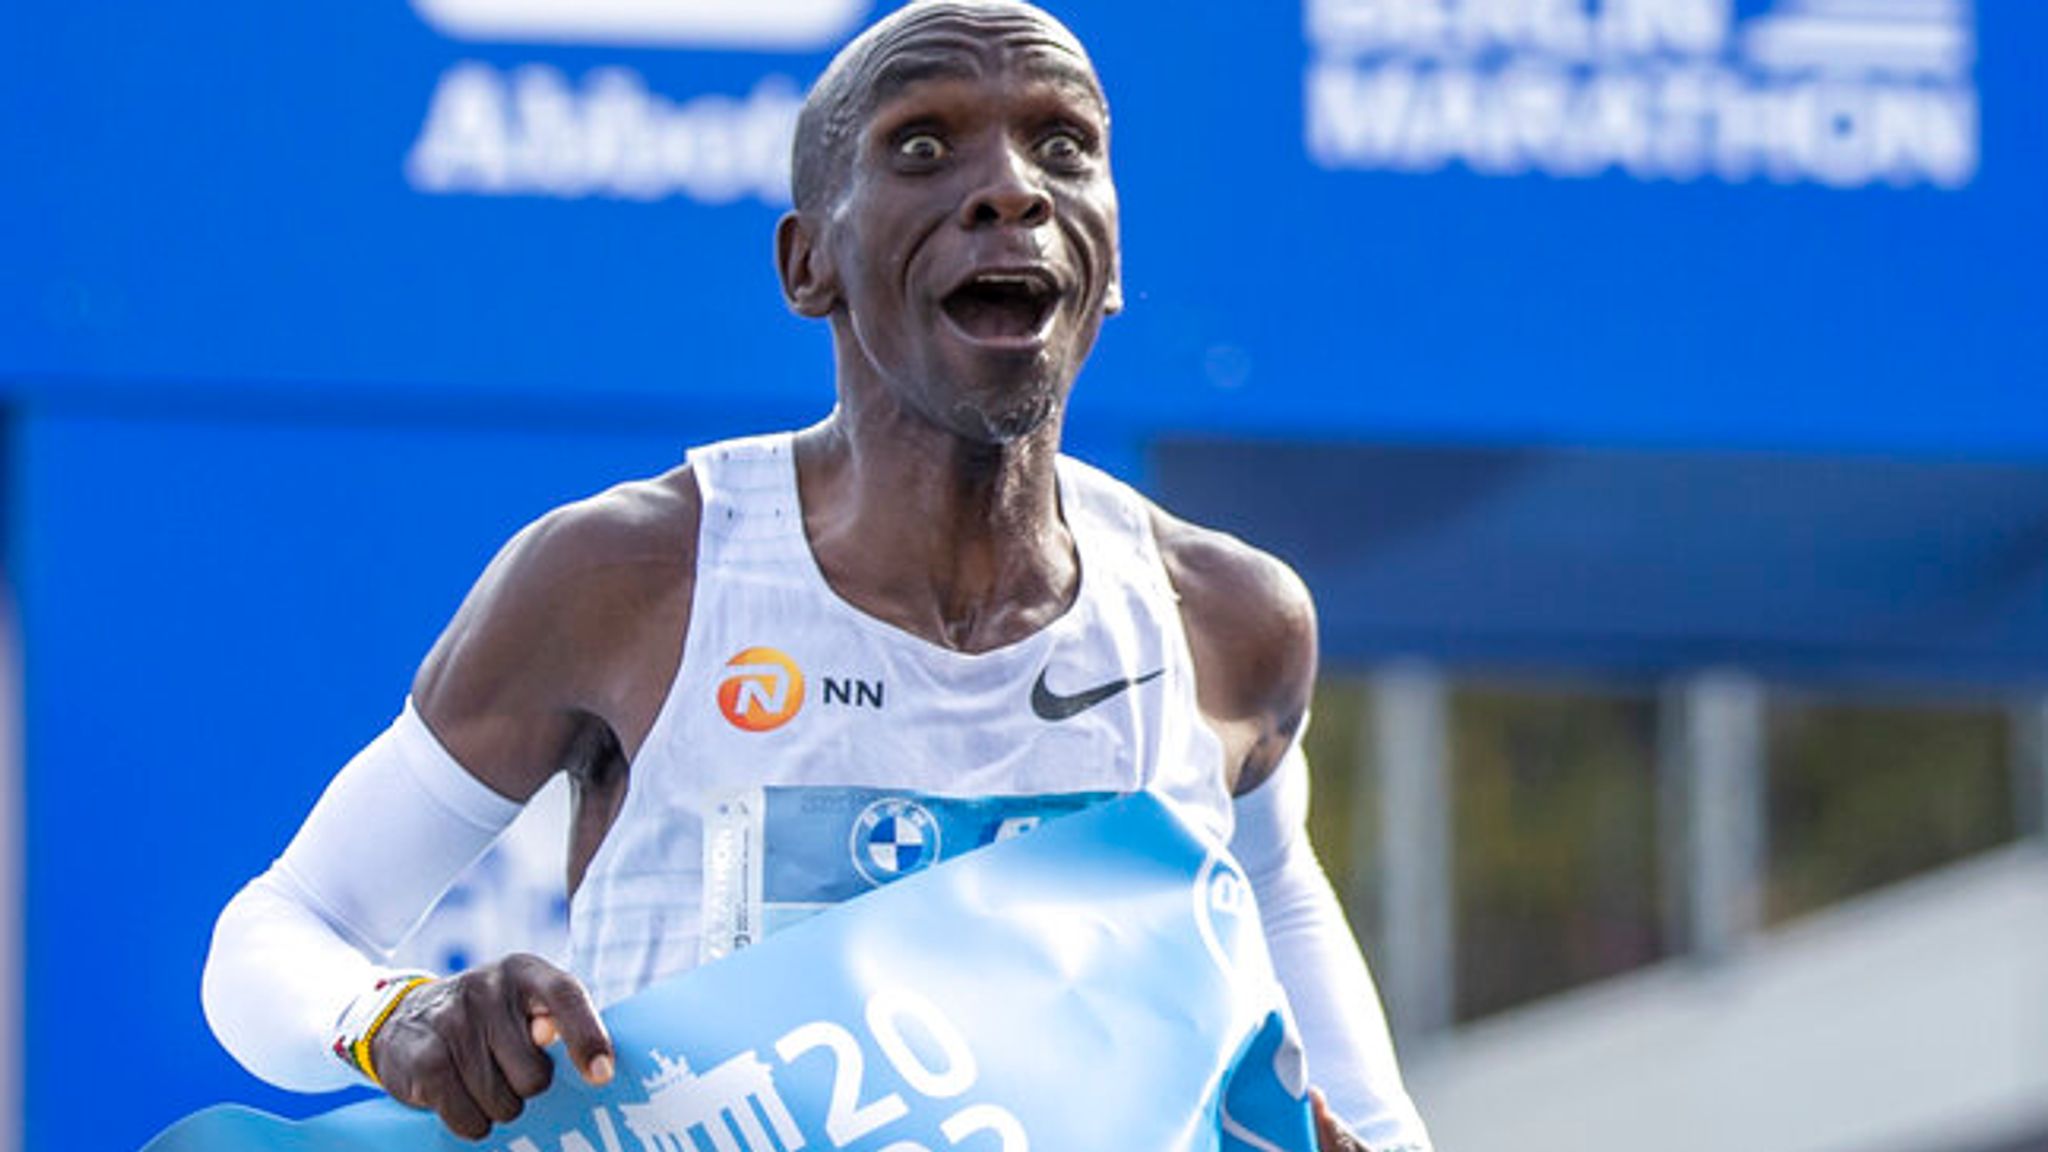 Eliud Kipchoge smashes own world at Berlin Marathon | World News Sky